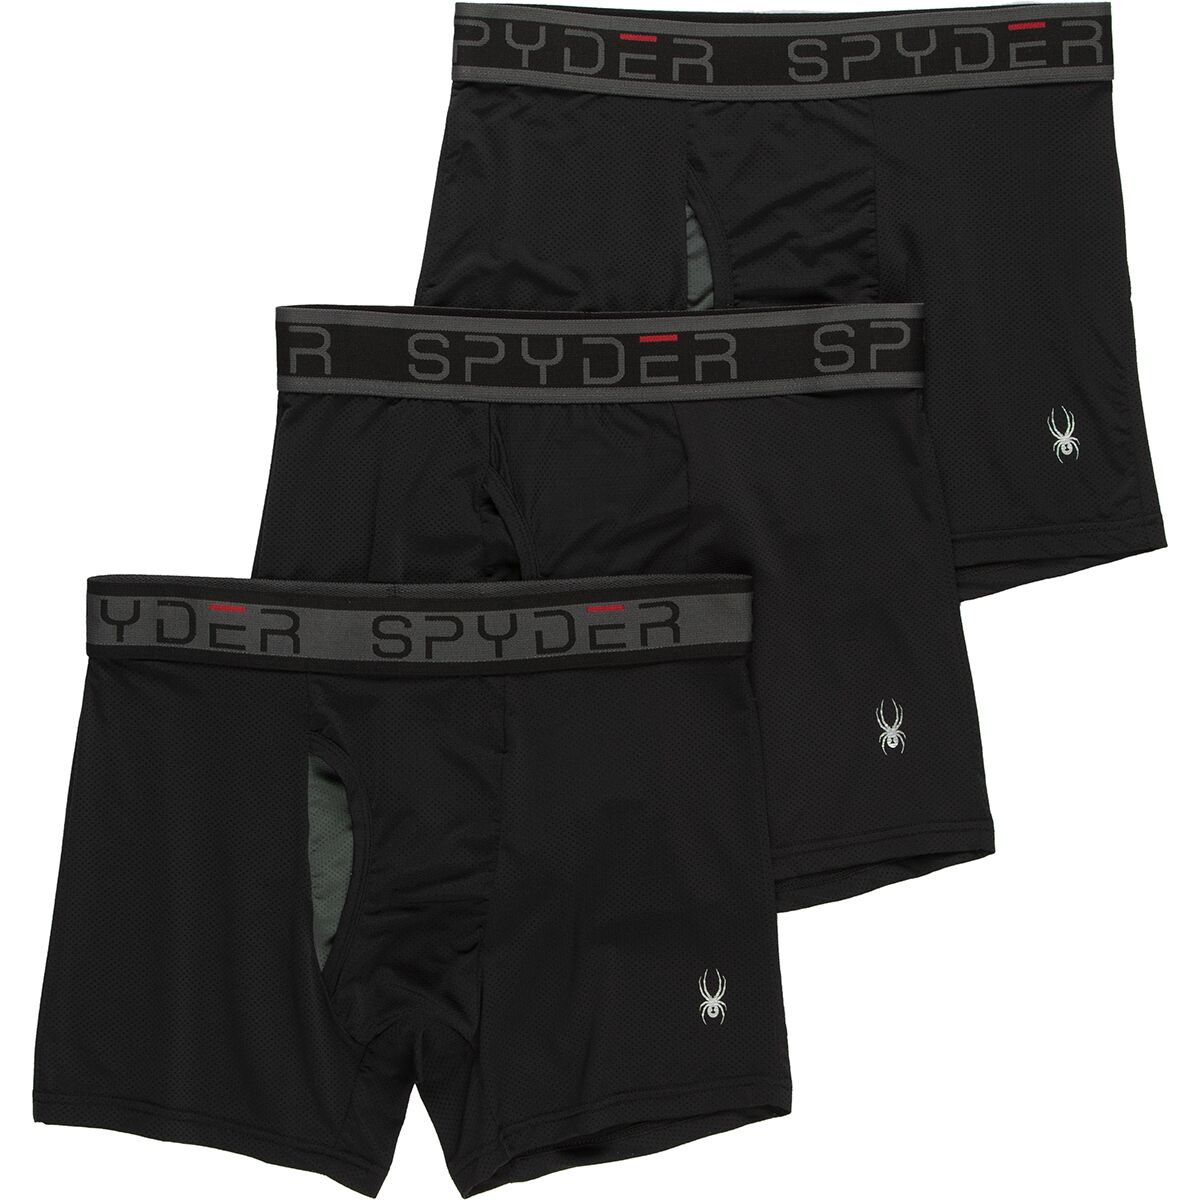  Spyder Performance Mesh Mens Boxer Briefs Sports Underwear 3  Pack/Fly Front